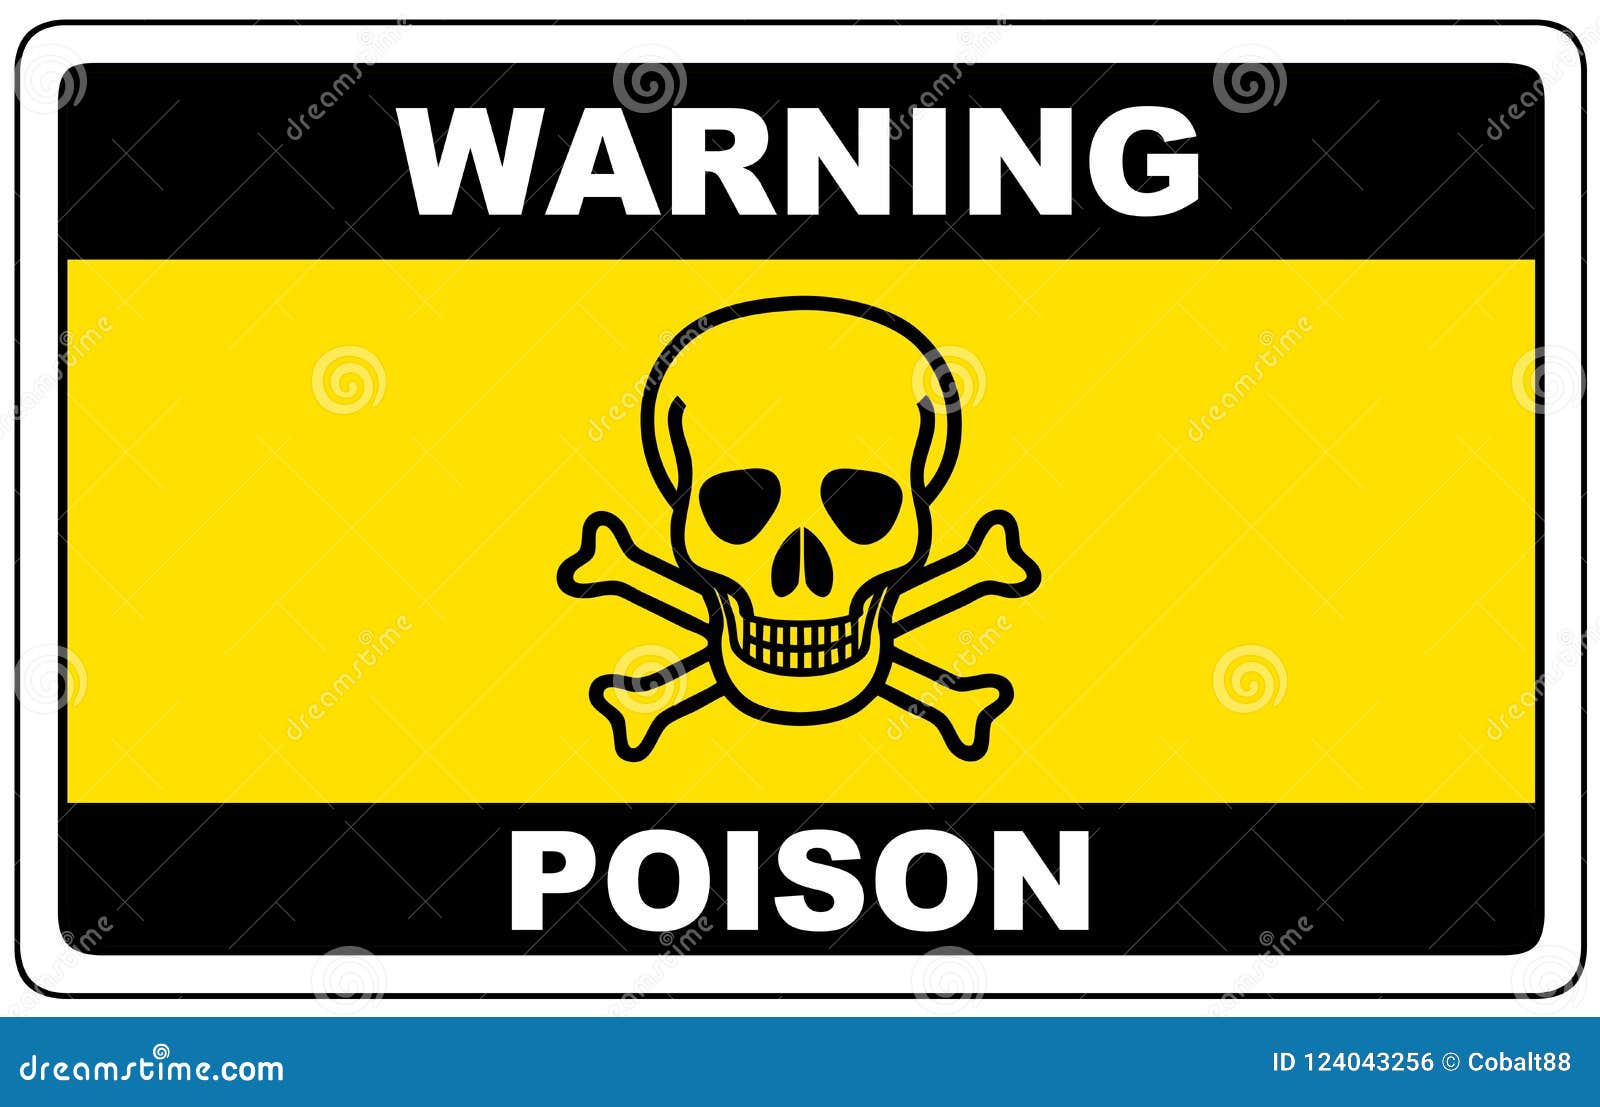 poison safety symbol